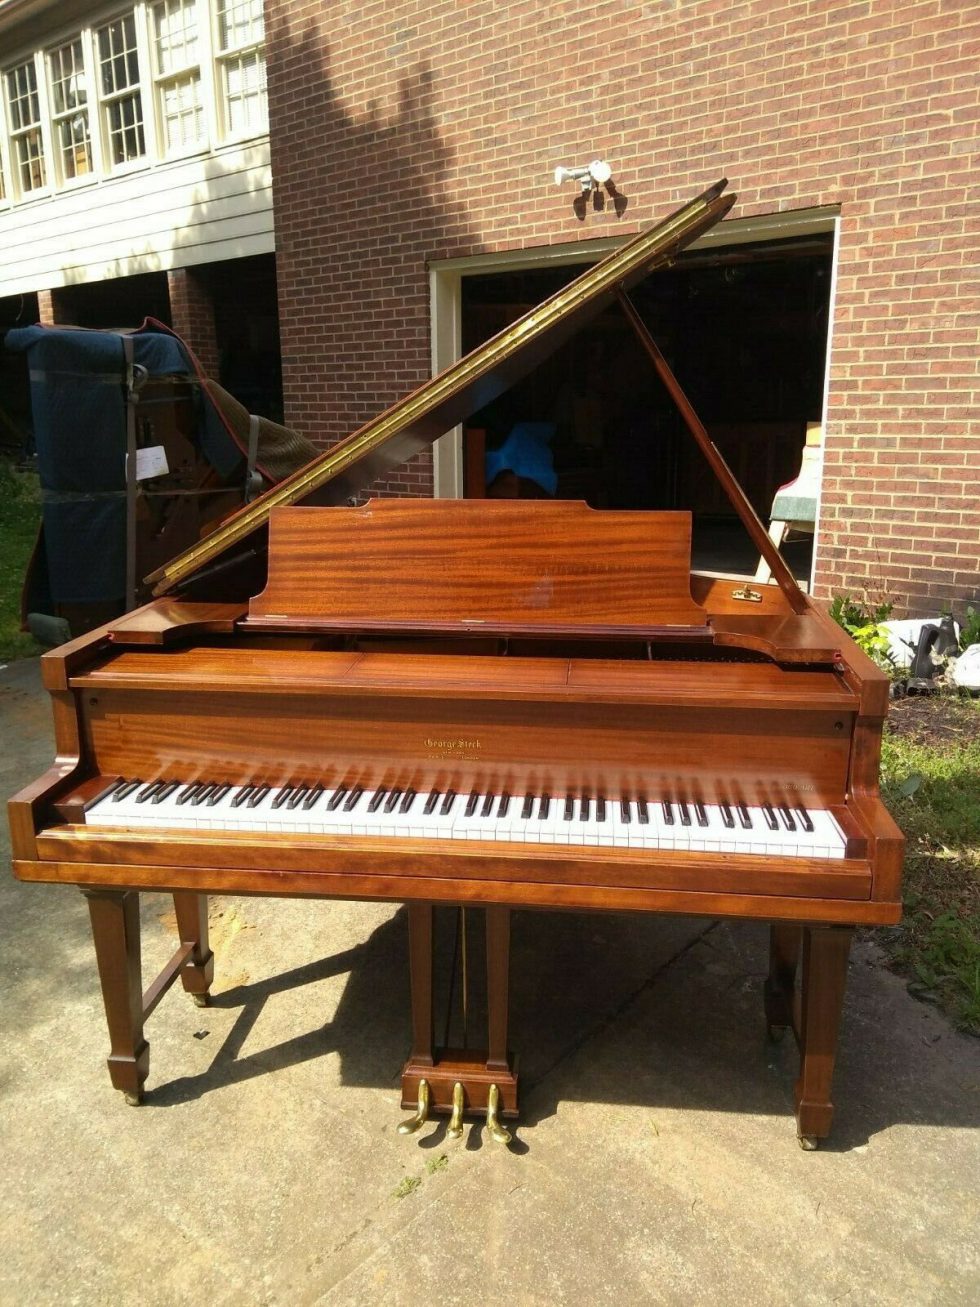 reproducing player piano